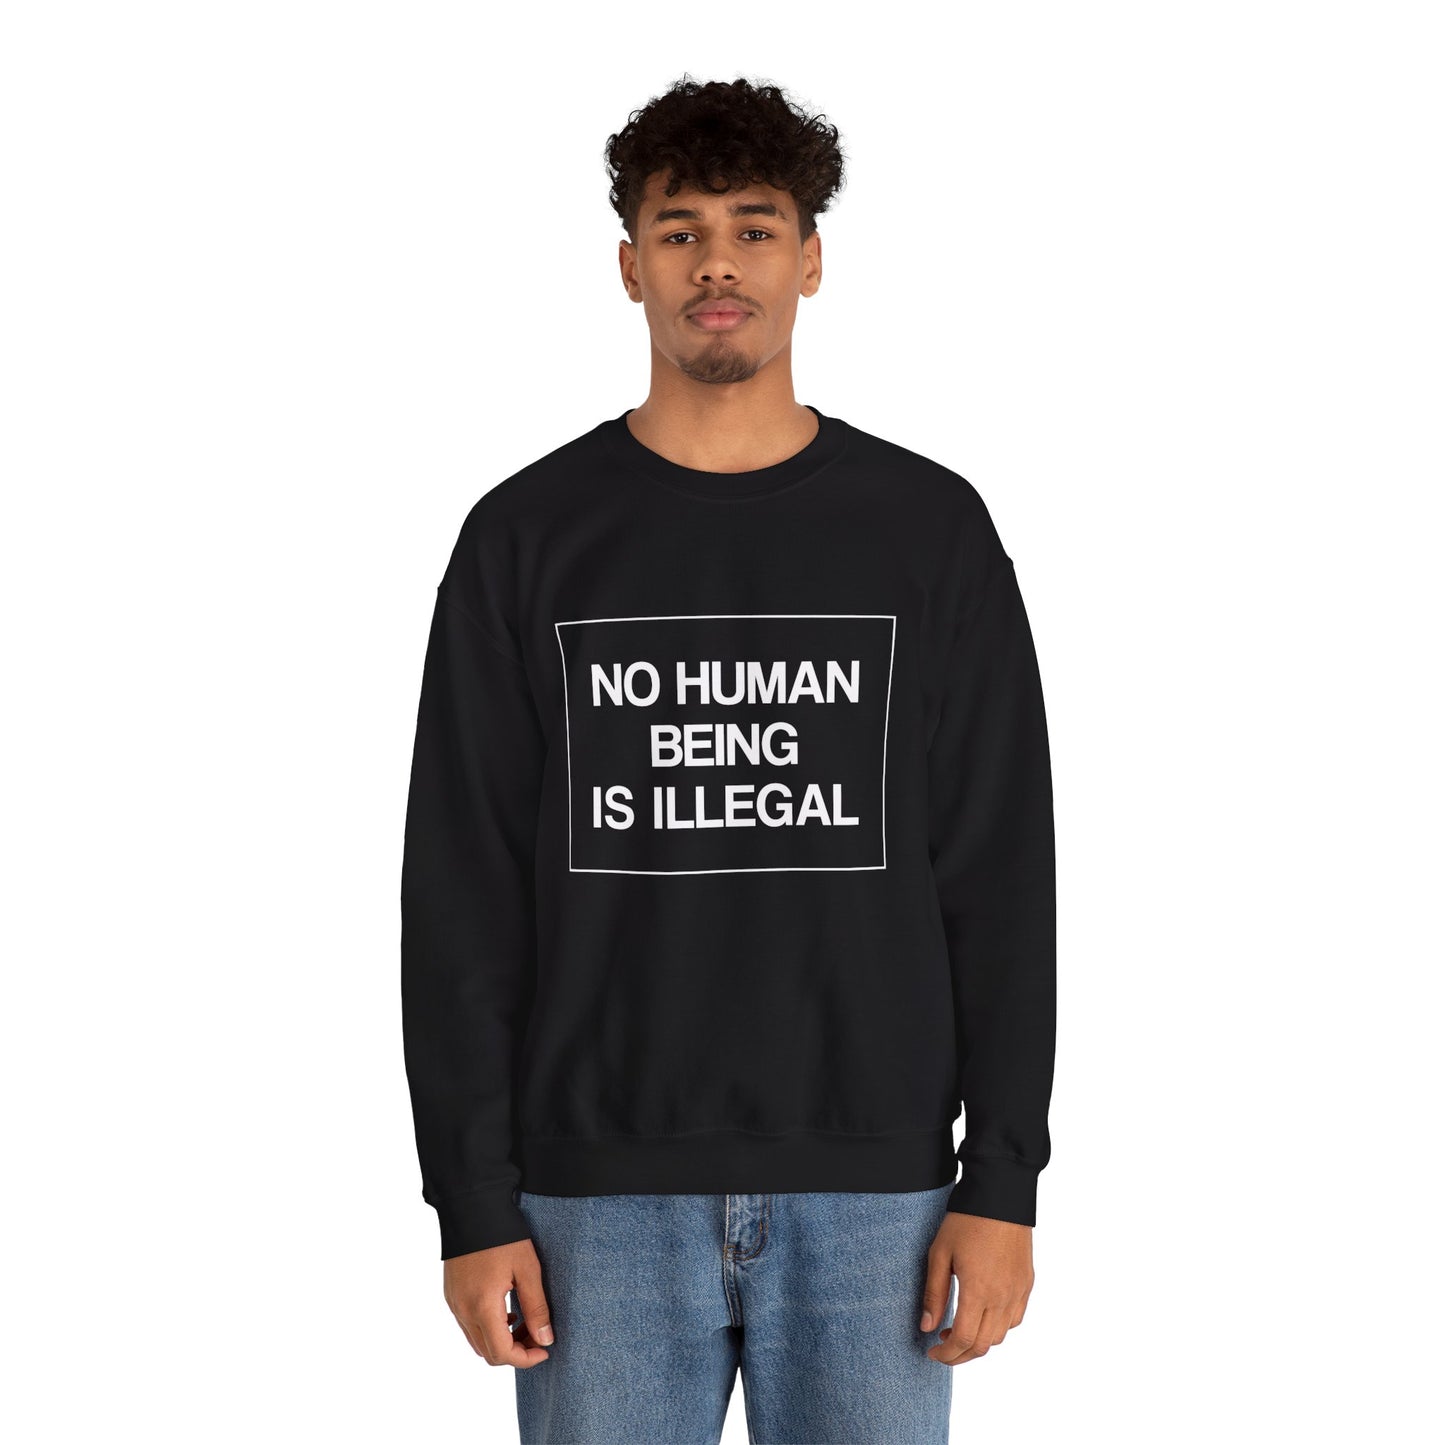 “No Human Being is Illegal” Unisex Sweatshirt